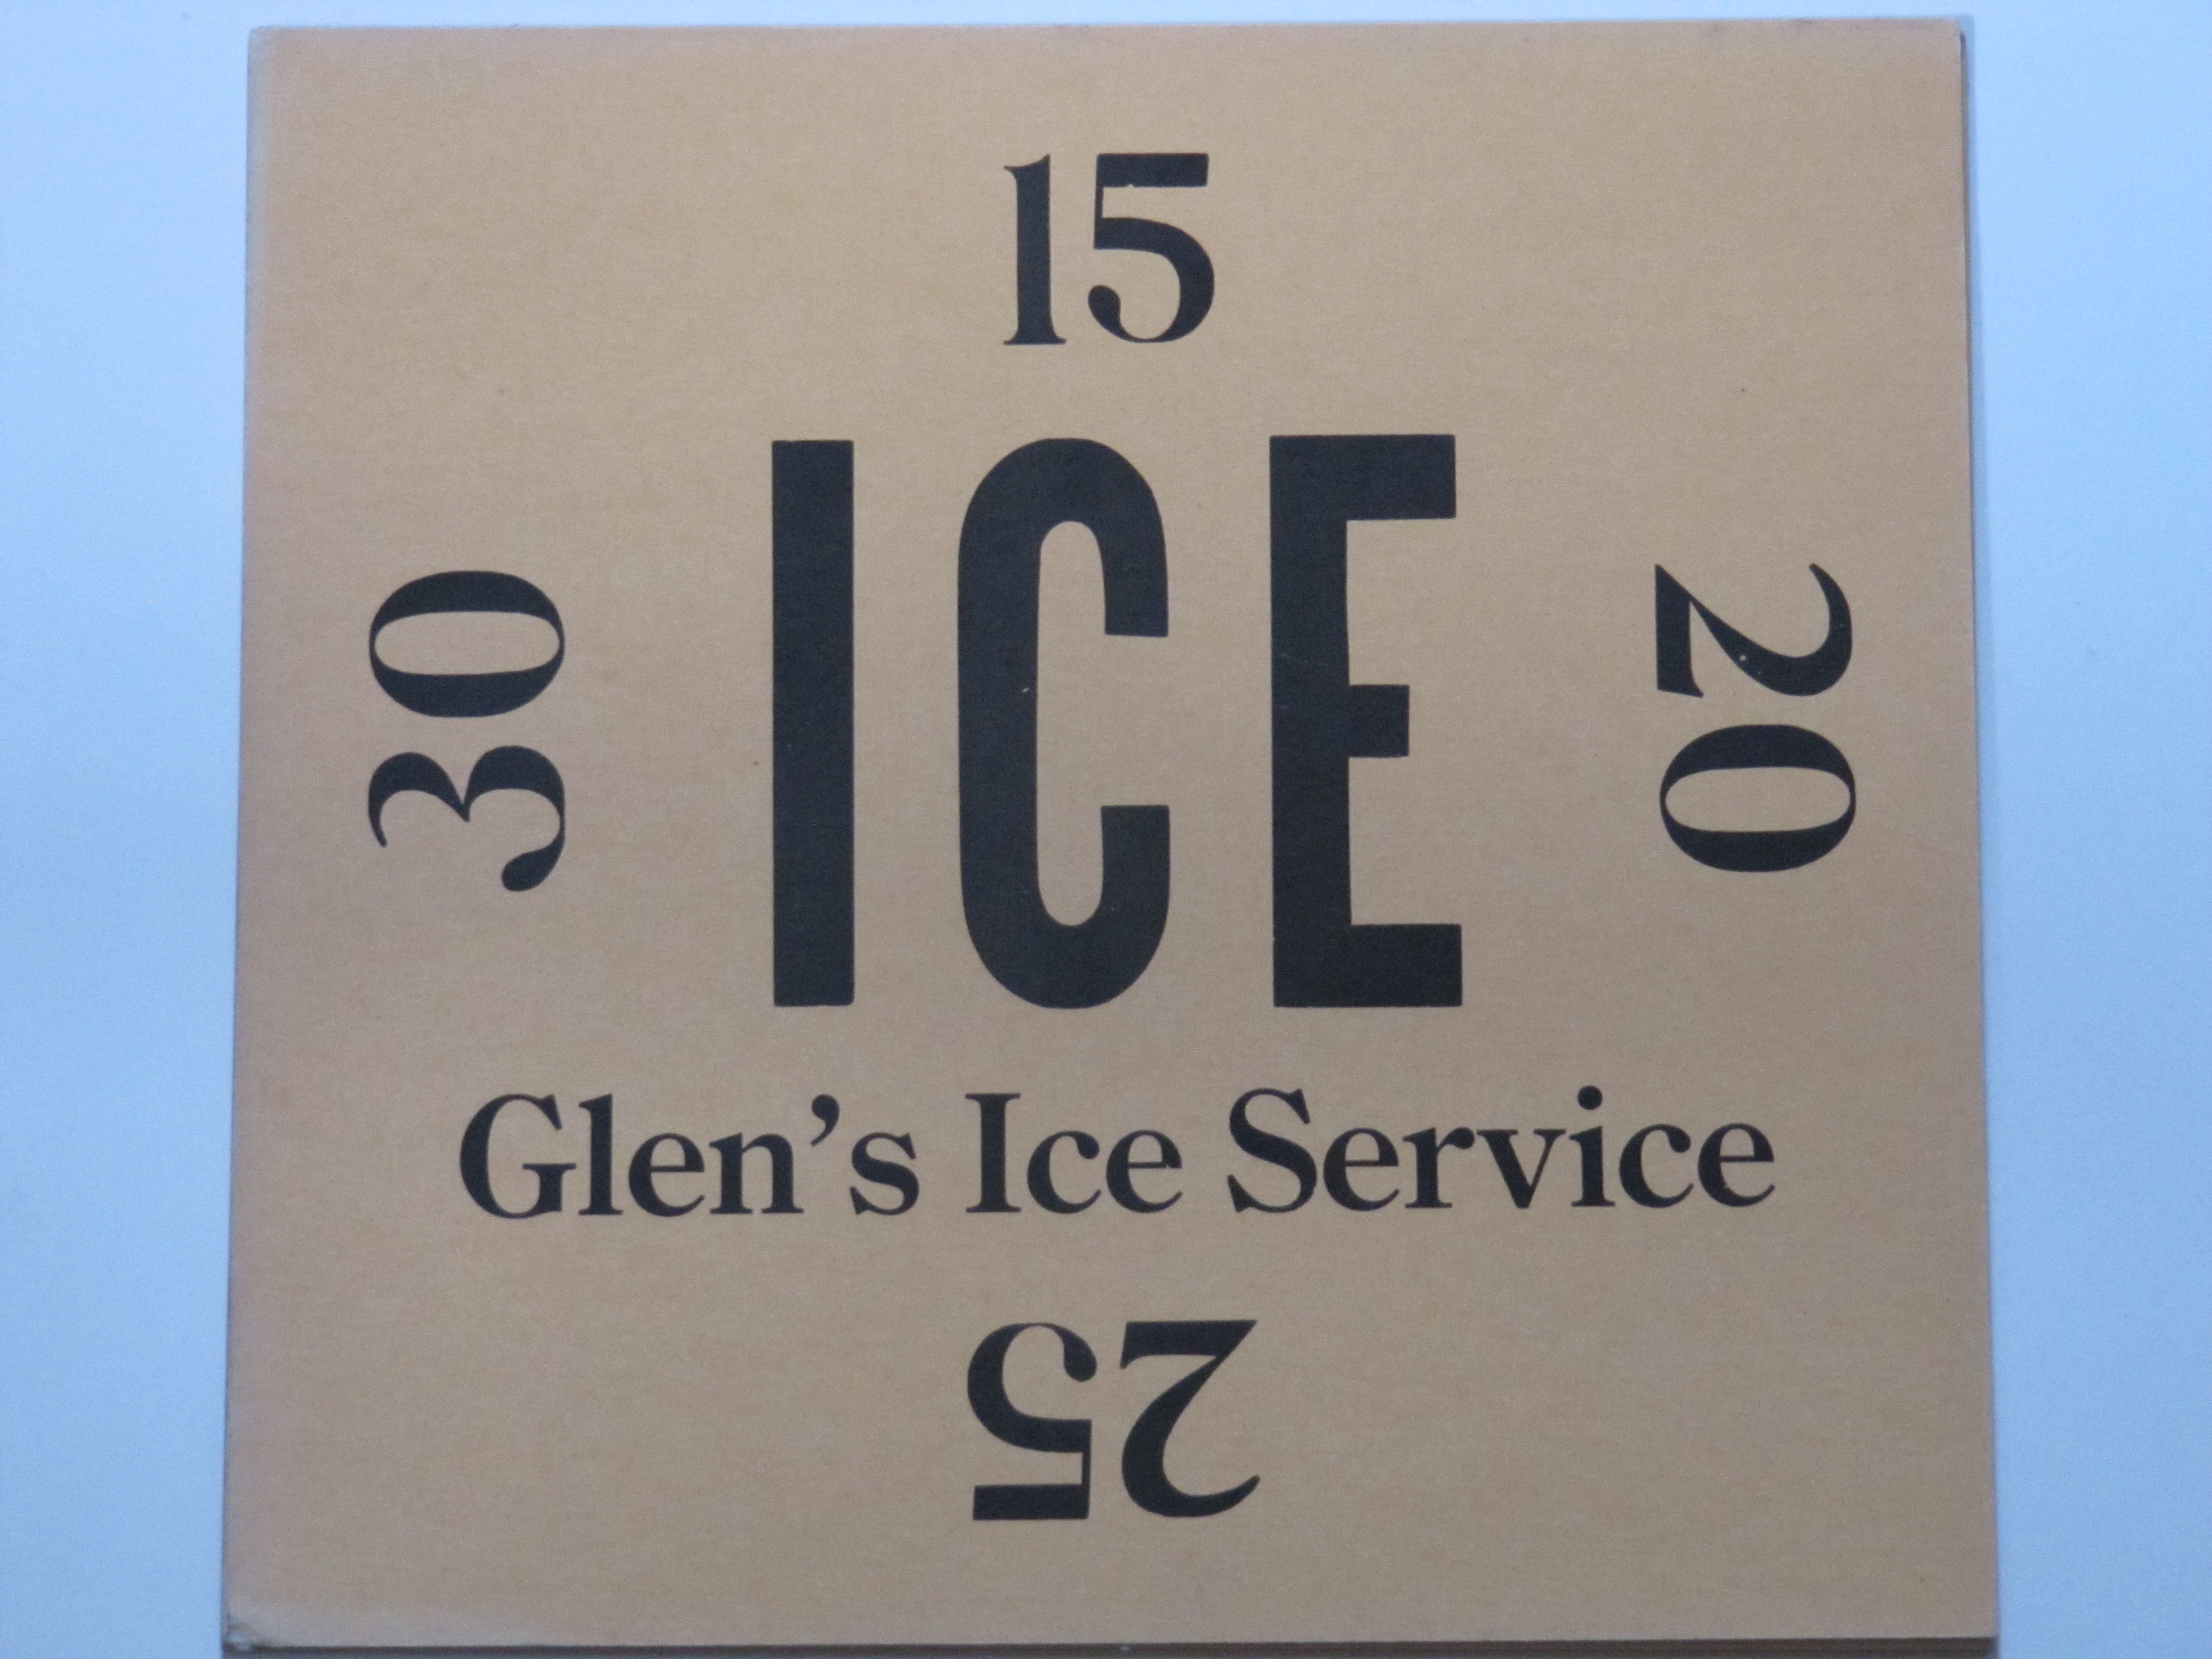 Glen's Ice Service